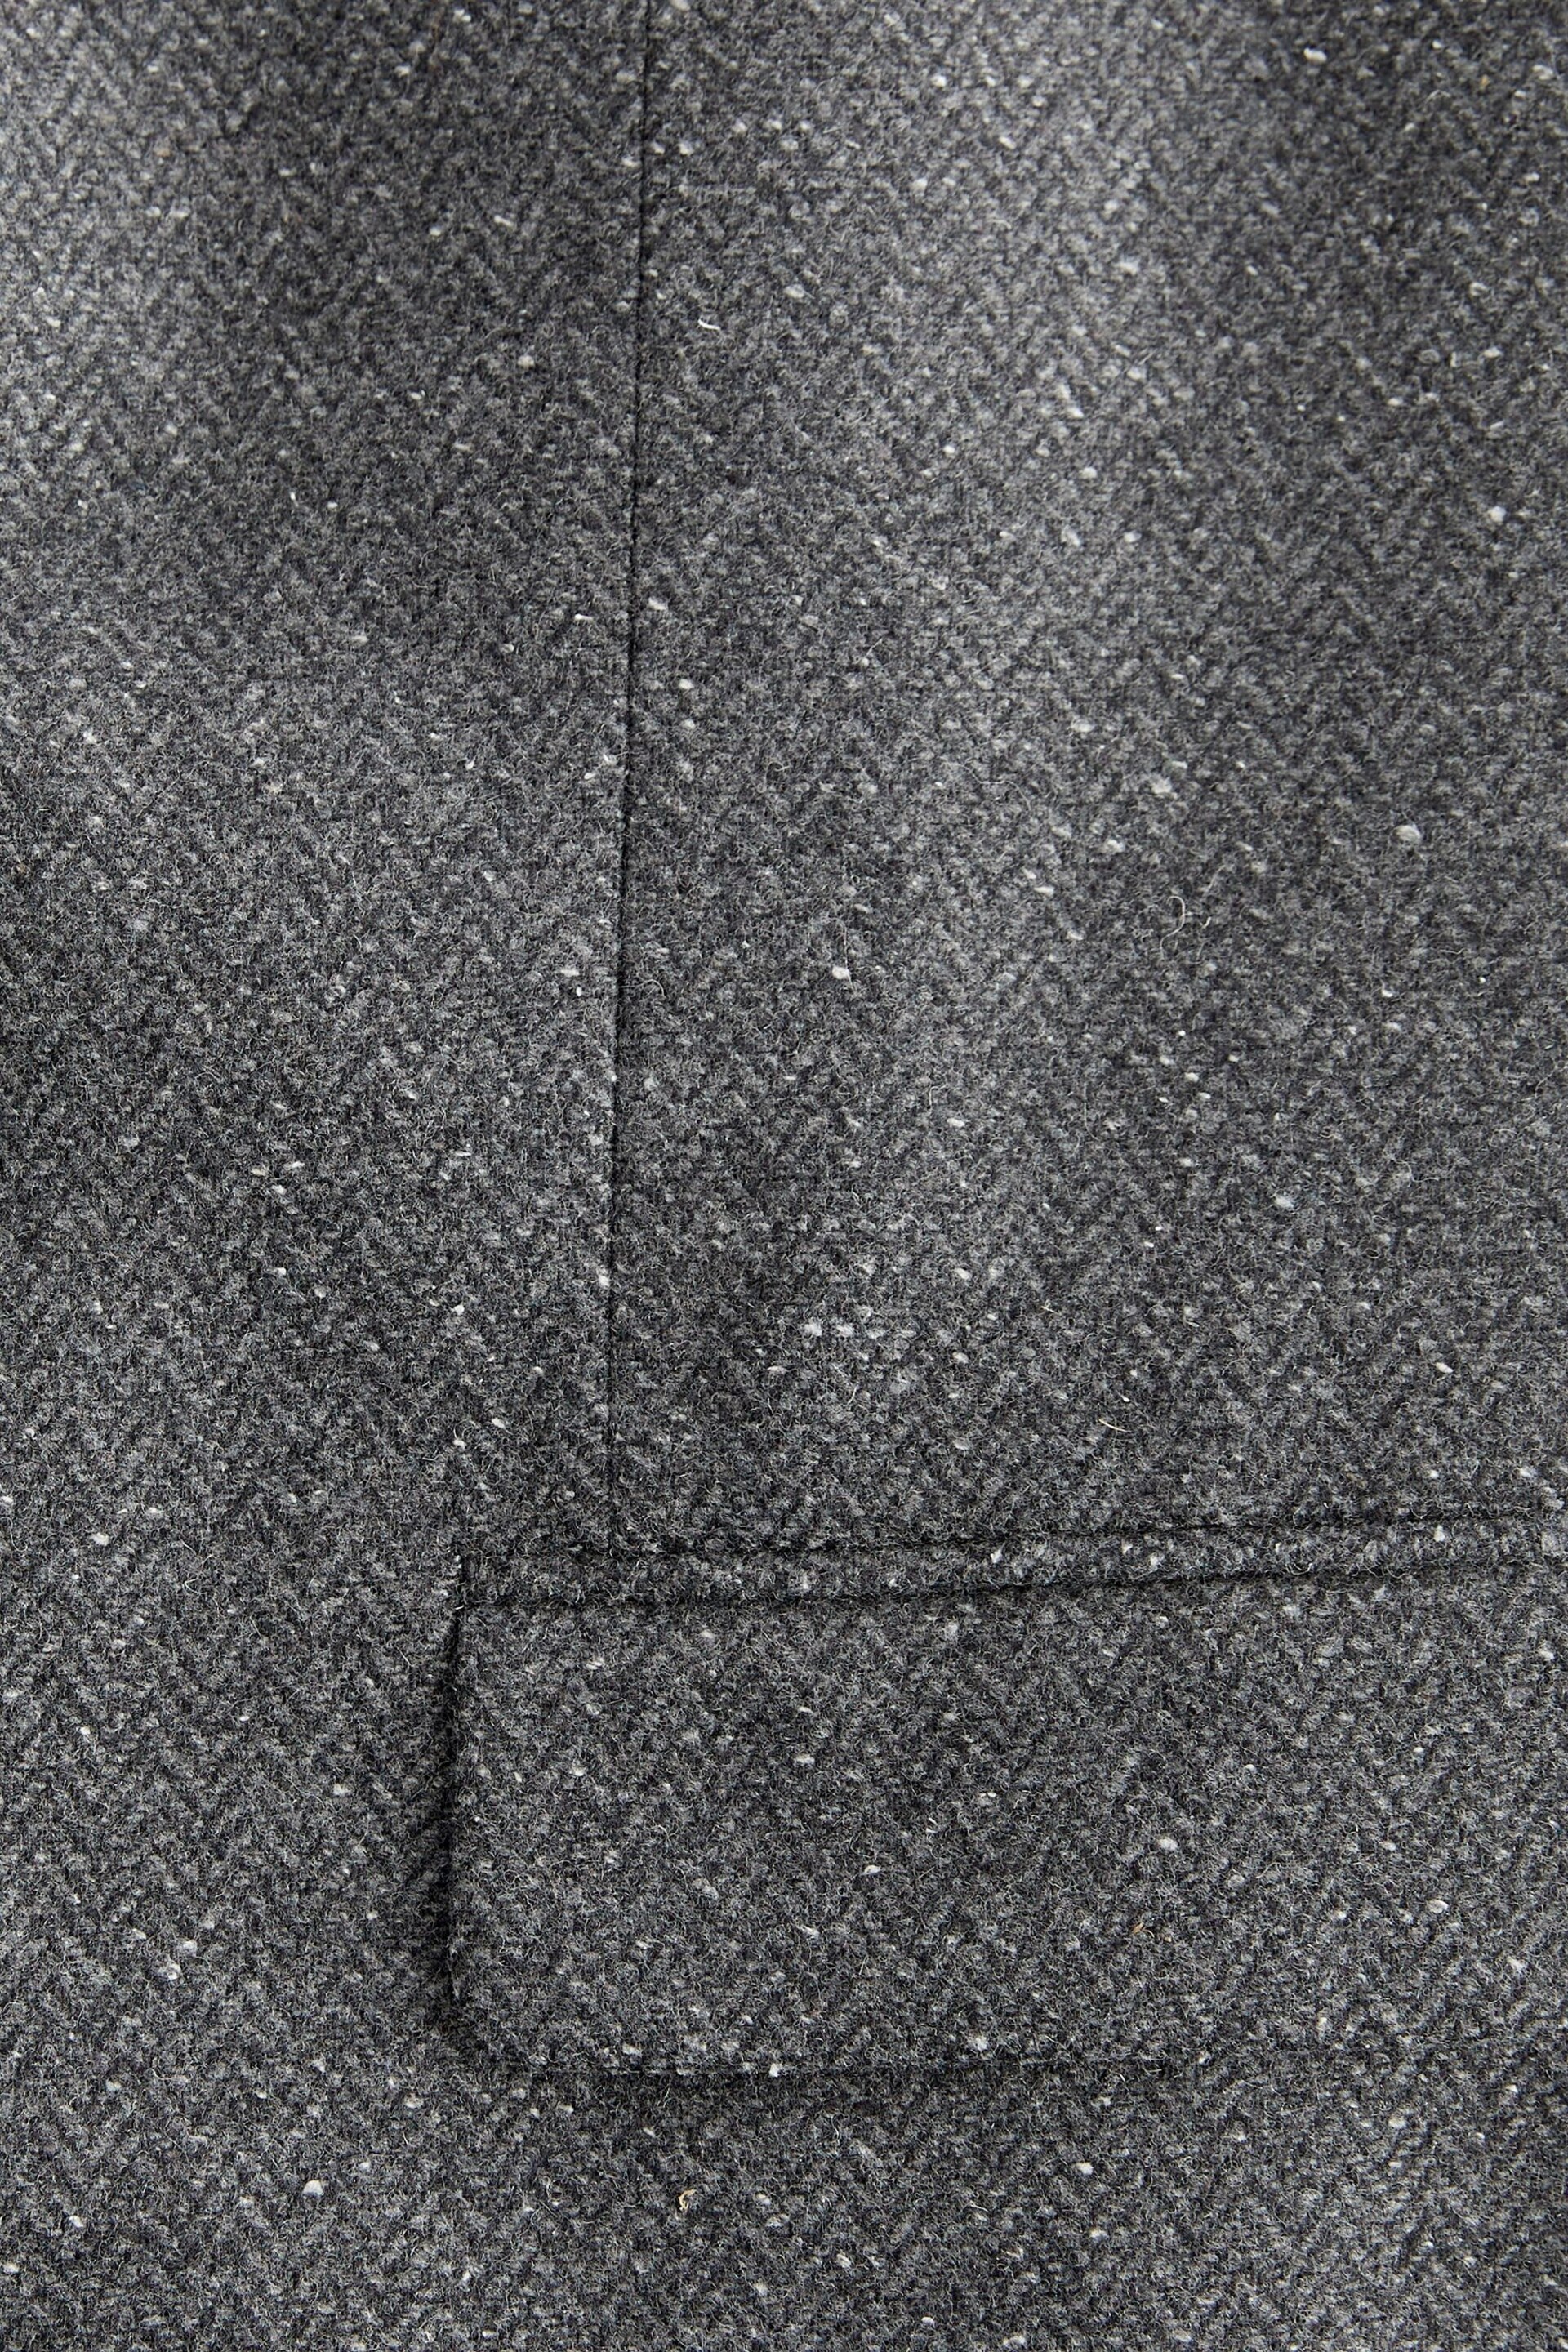 Grey Nova Fides Italian Fabric Herringbone Textured Wool Blend Suit Jacket - Image 11 of 11